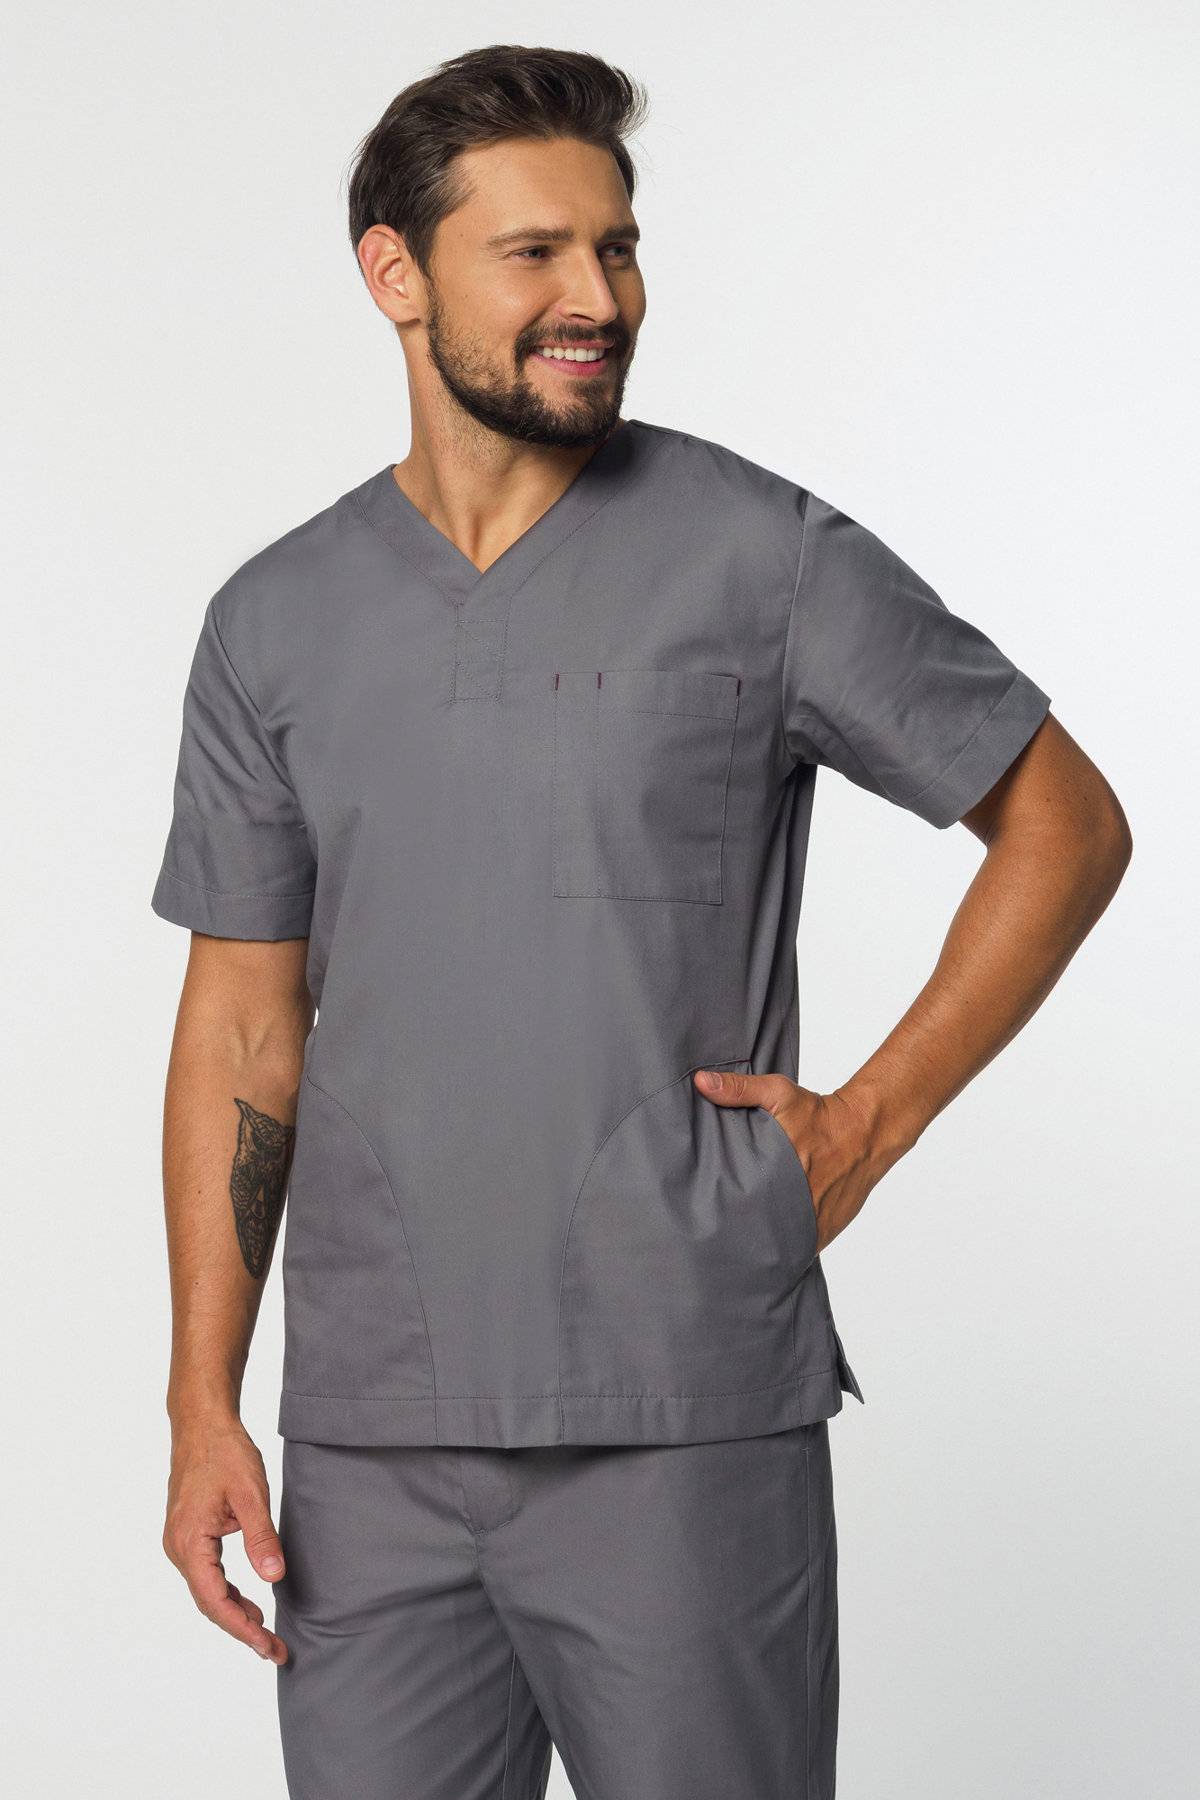 Bluza medyczna męska (kolor szary, MB2-S)